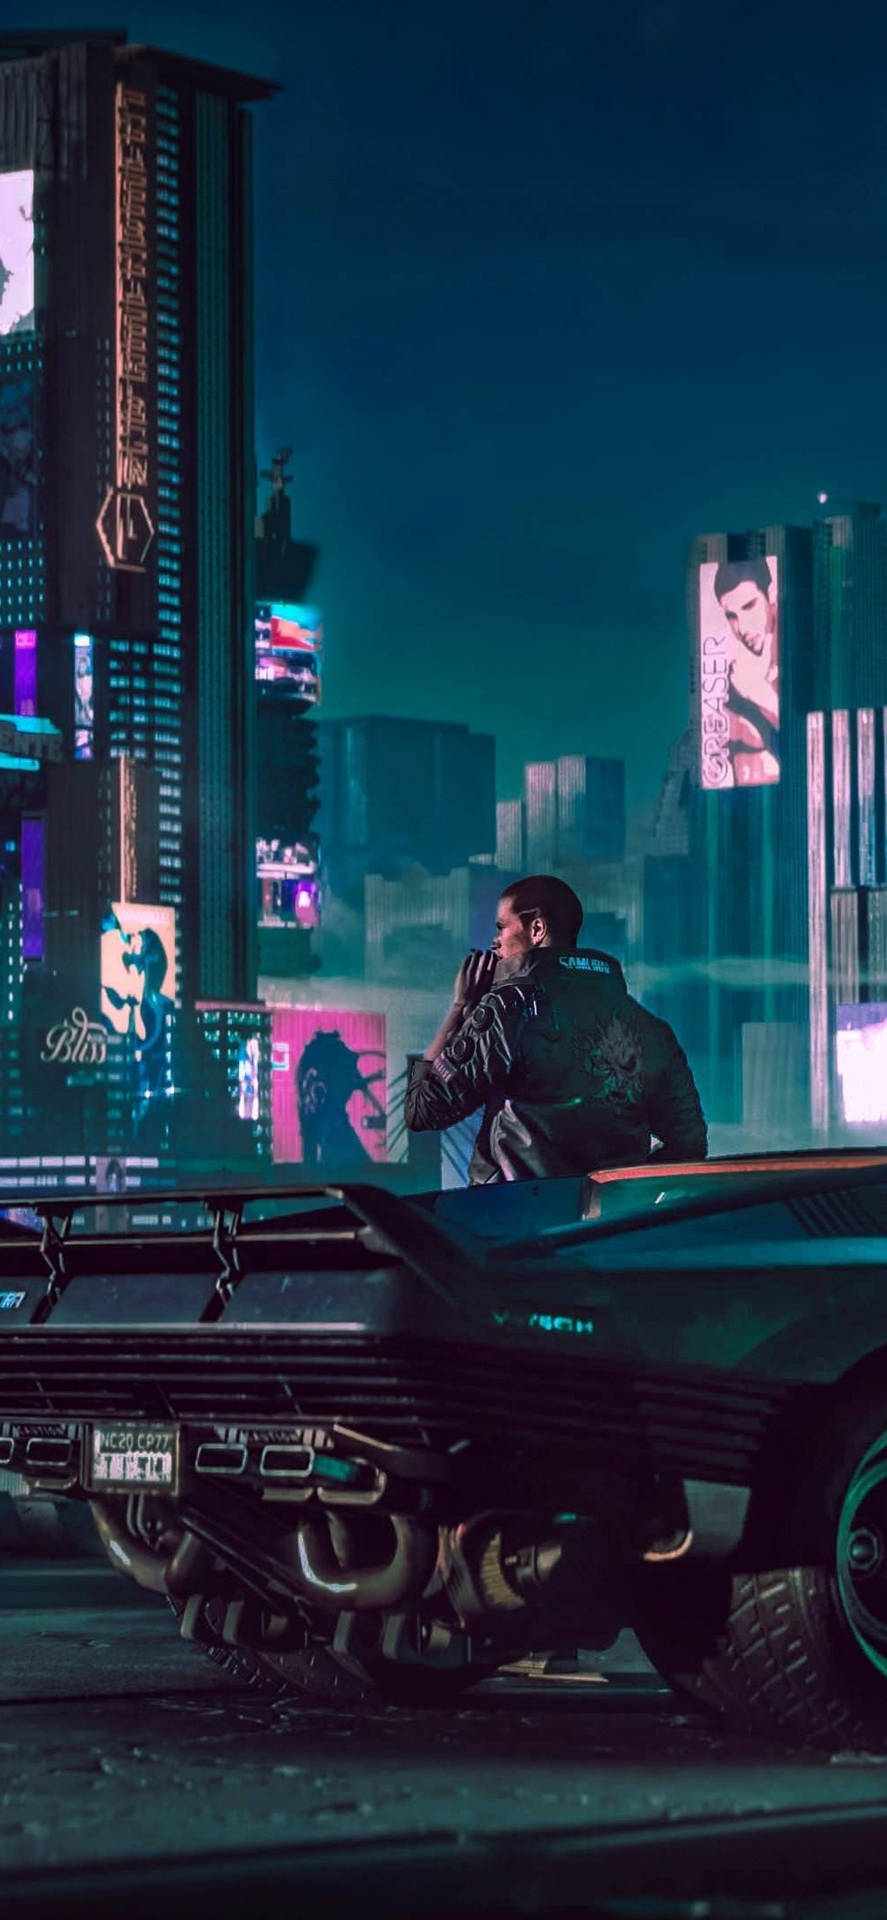 Man With Car Cyberpunk Iphone X Background